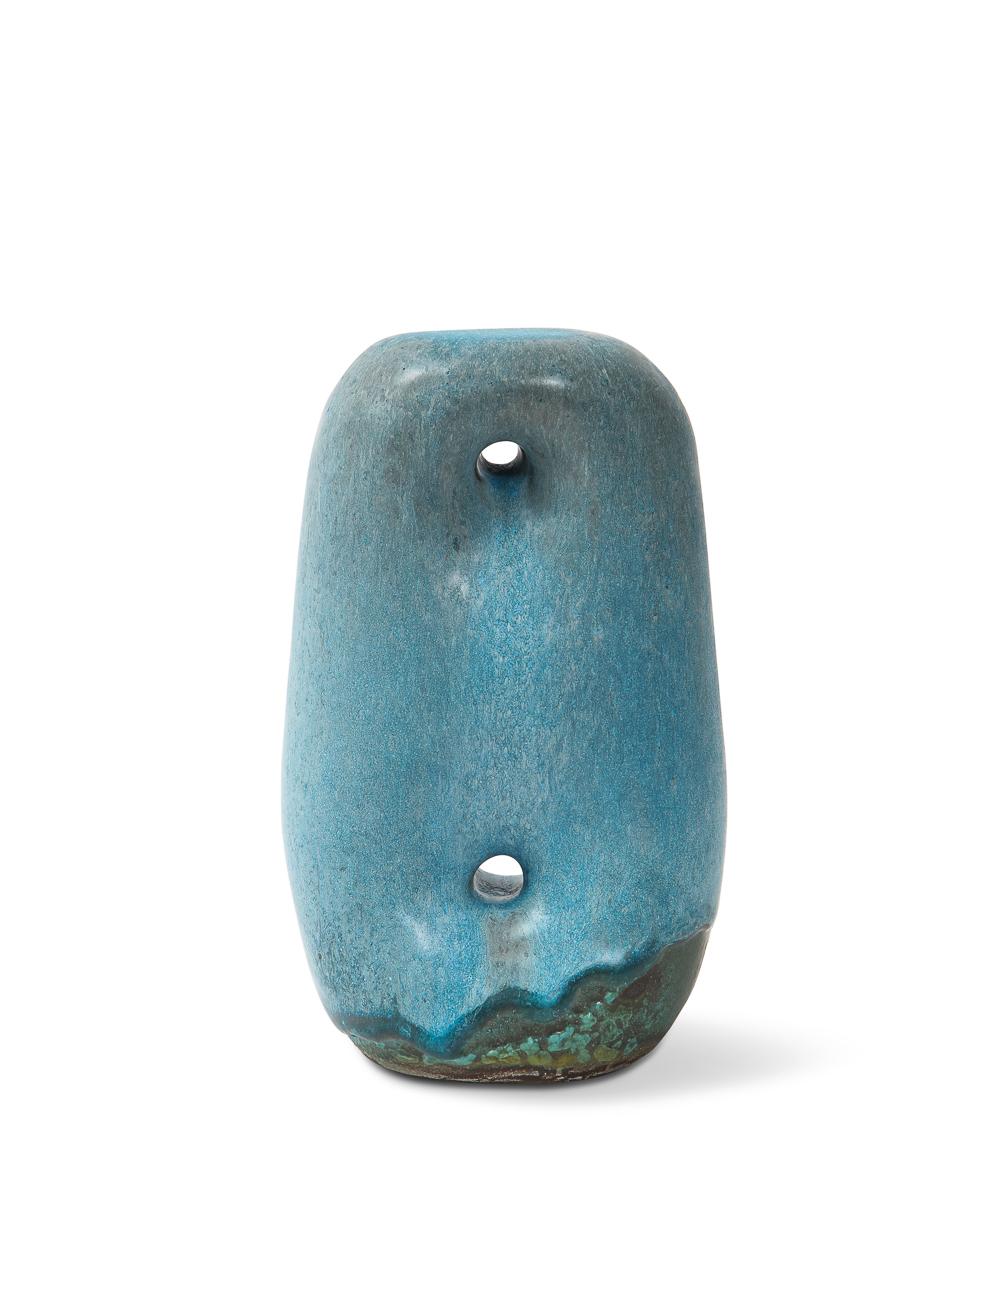 Pierced sculpture #4 by David Haskell. Ceramic sculpture with blue glazes. Artist signed on underside.